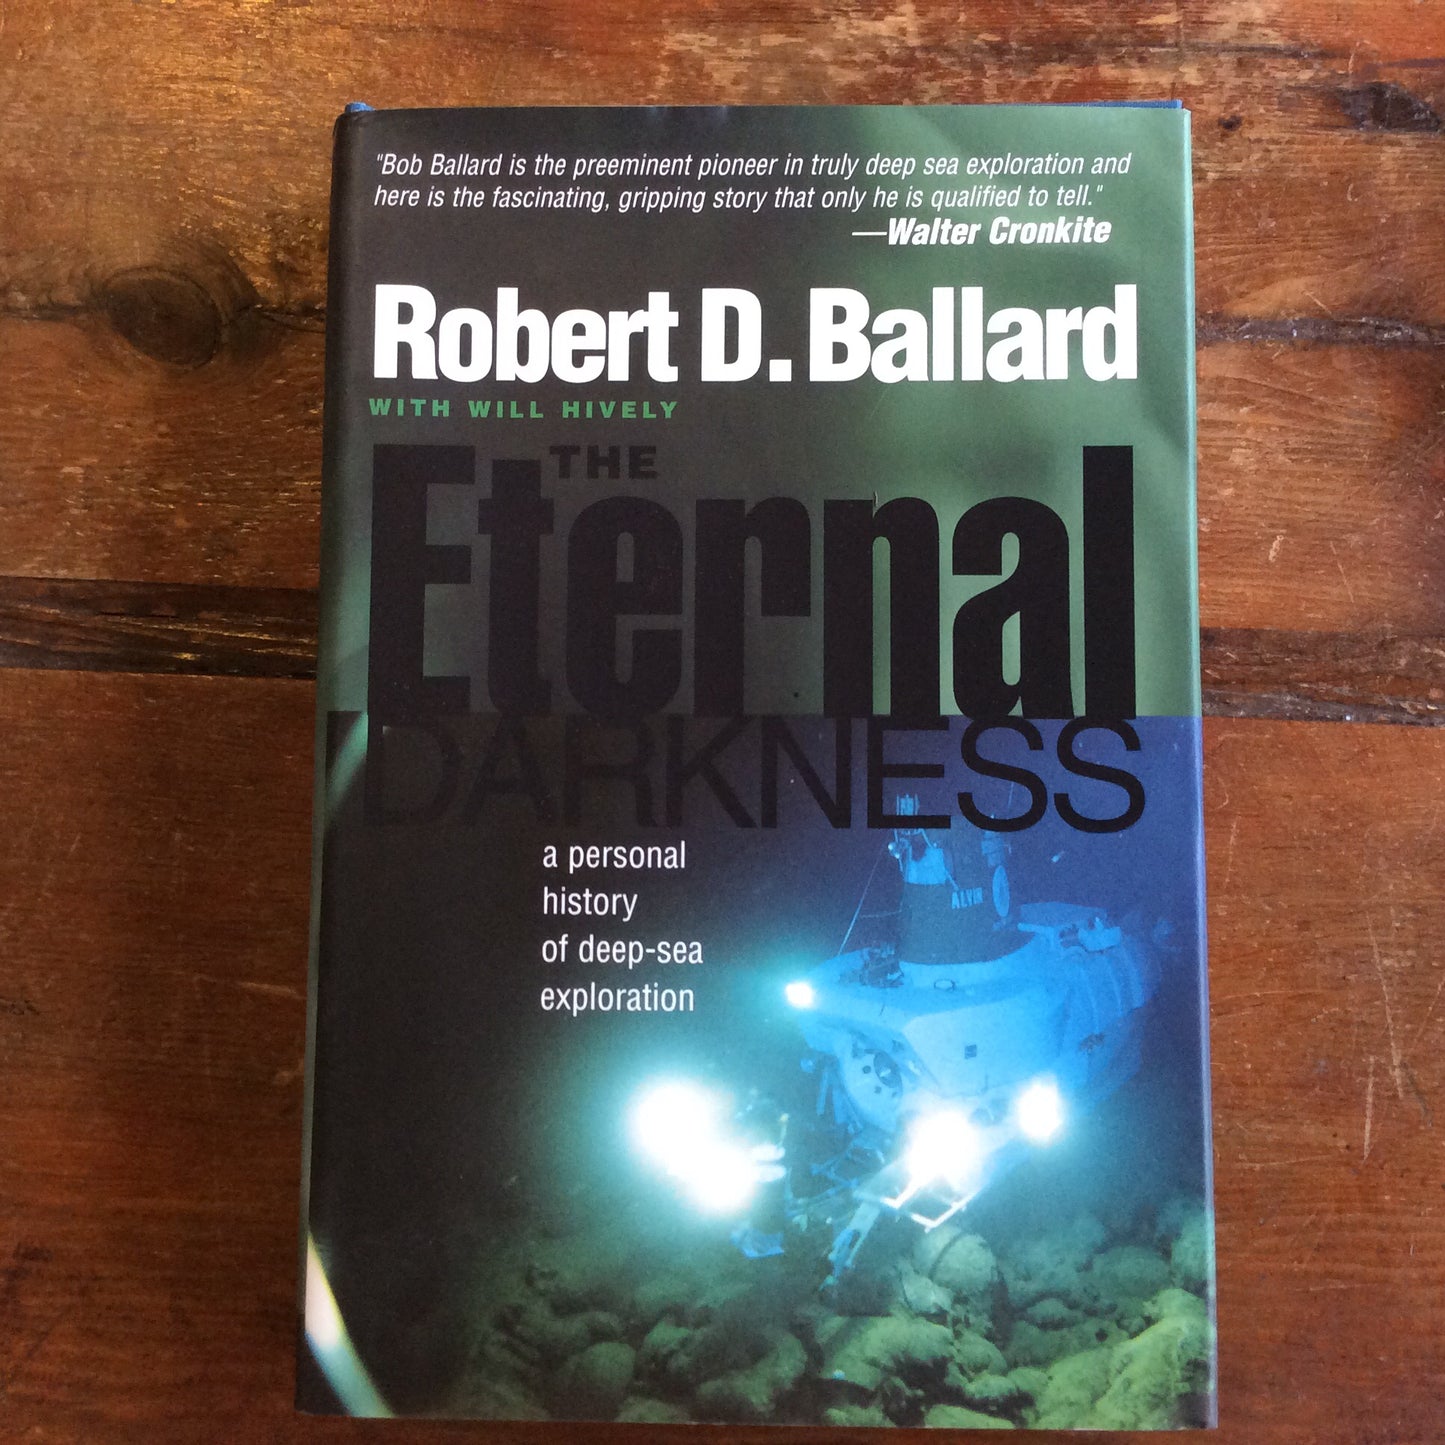 Book, "The Eternal Darkness"